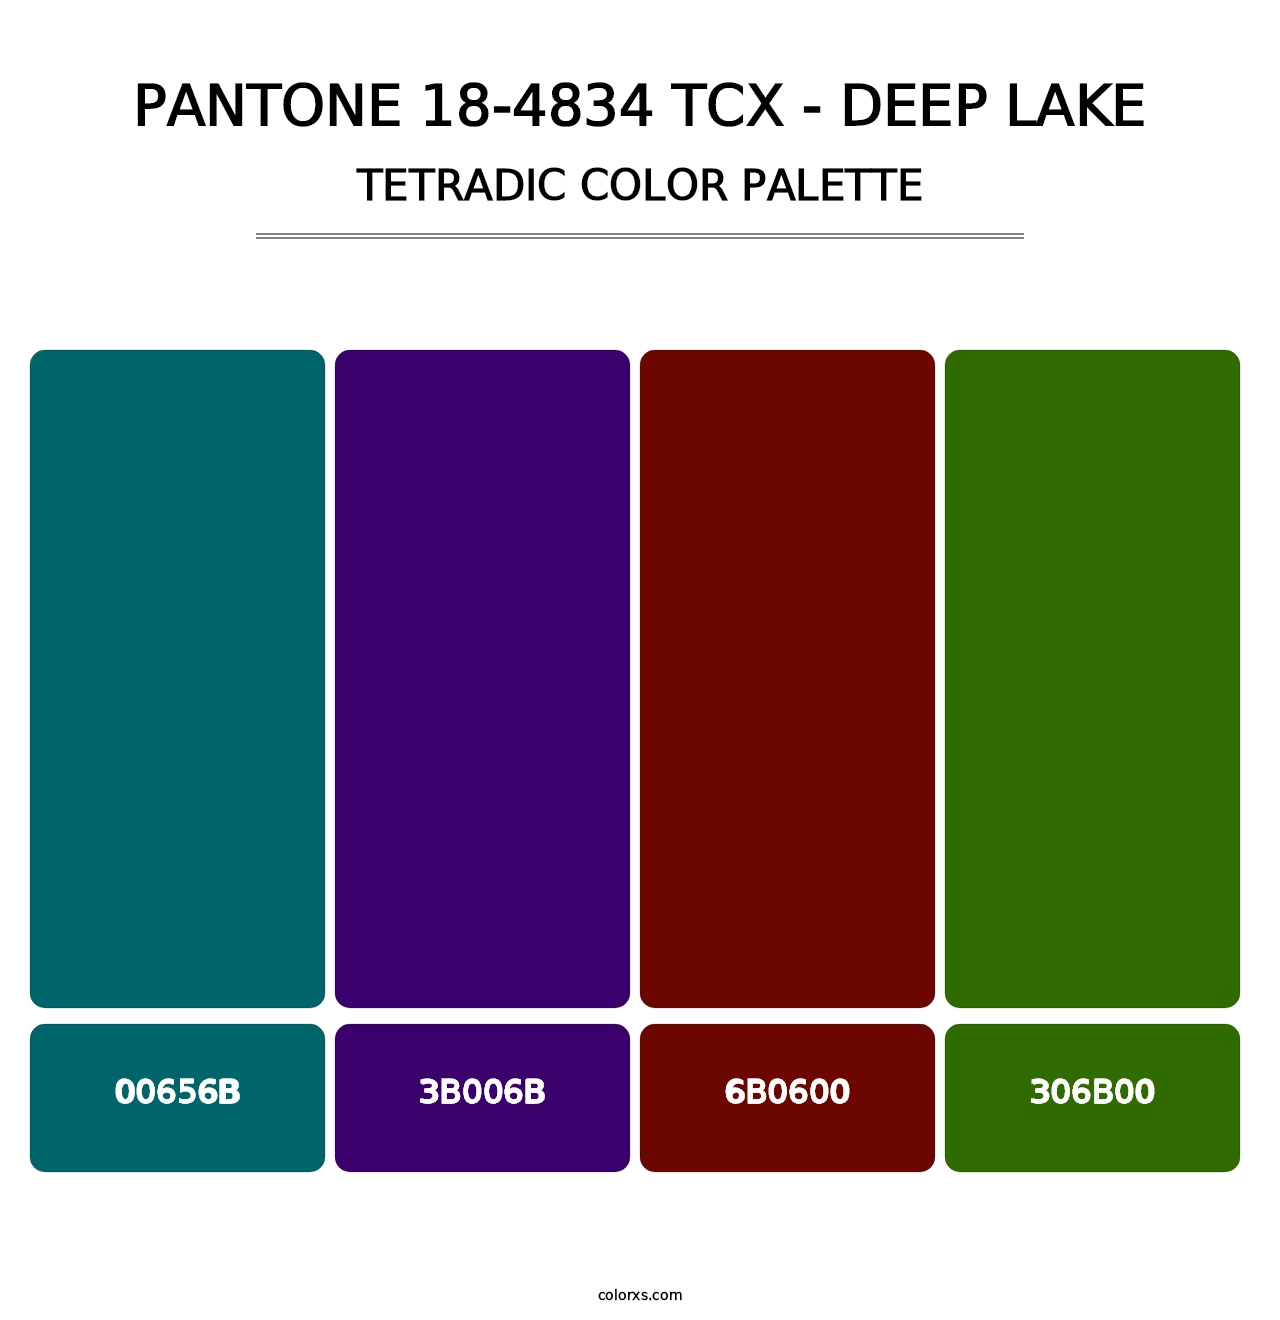 PANTONE 18-4834 TCX - Deep Lake - Tetradic Color Palette